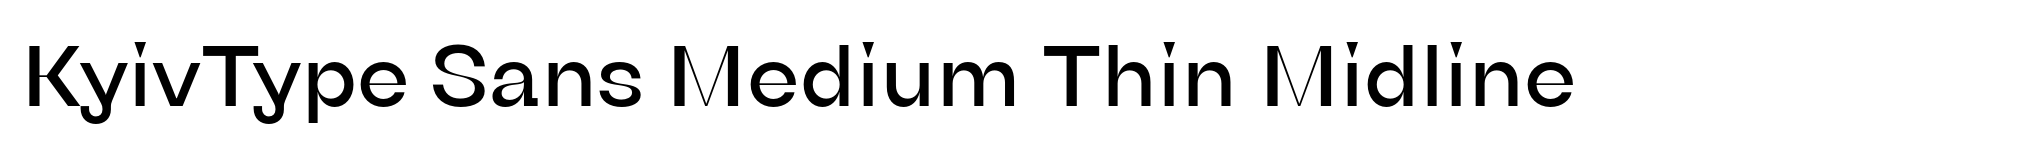 KyivType Sans Medium Thin Midline image